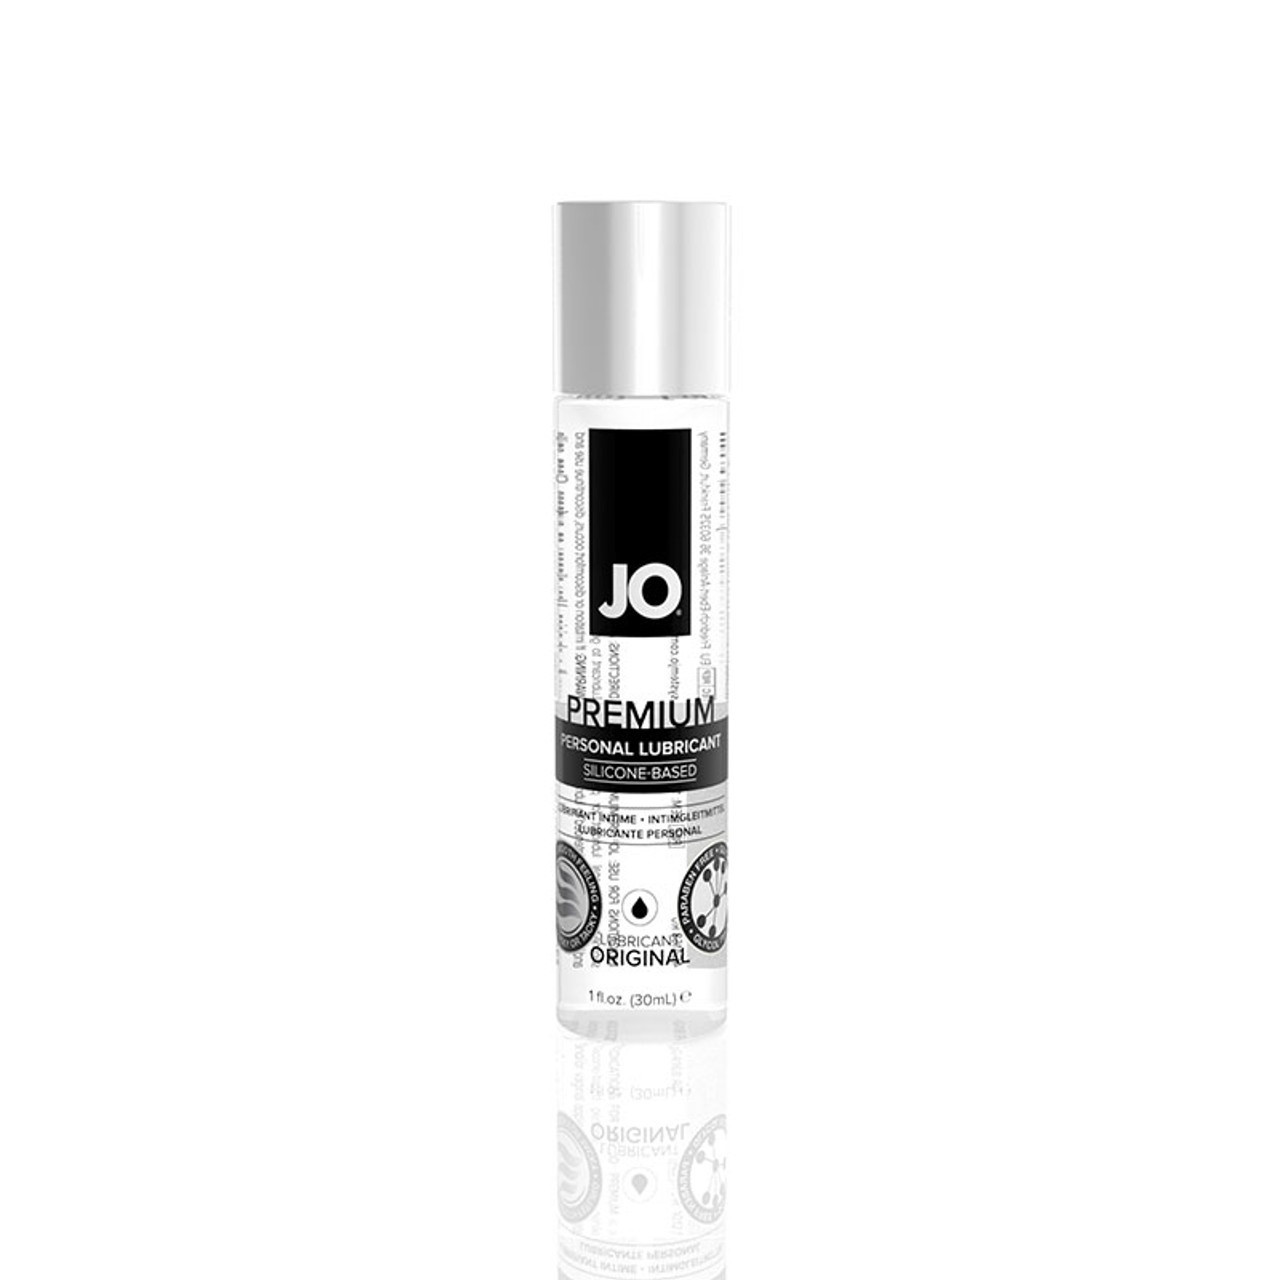 JO Premium Silicone-Based Lubricant